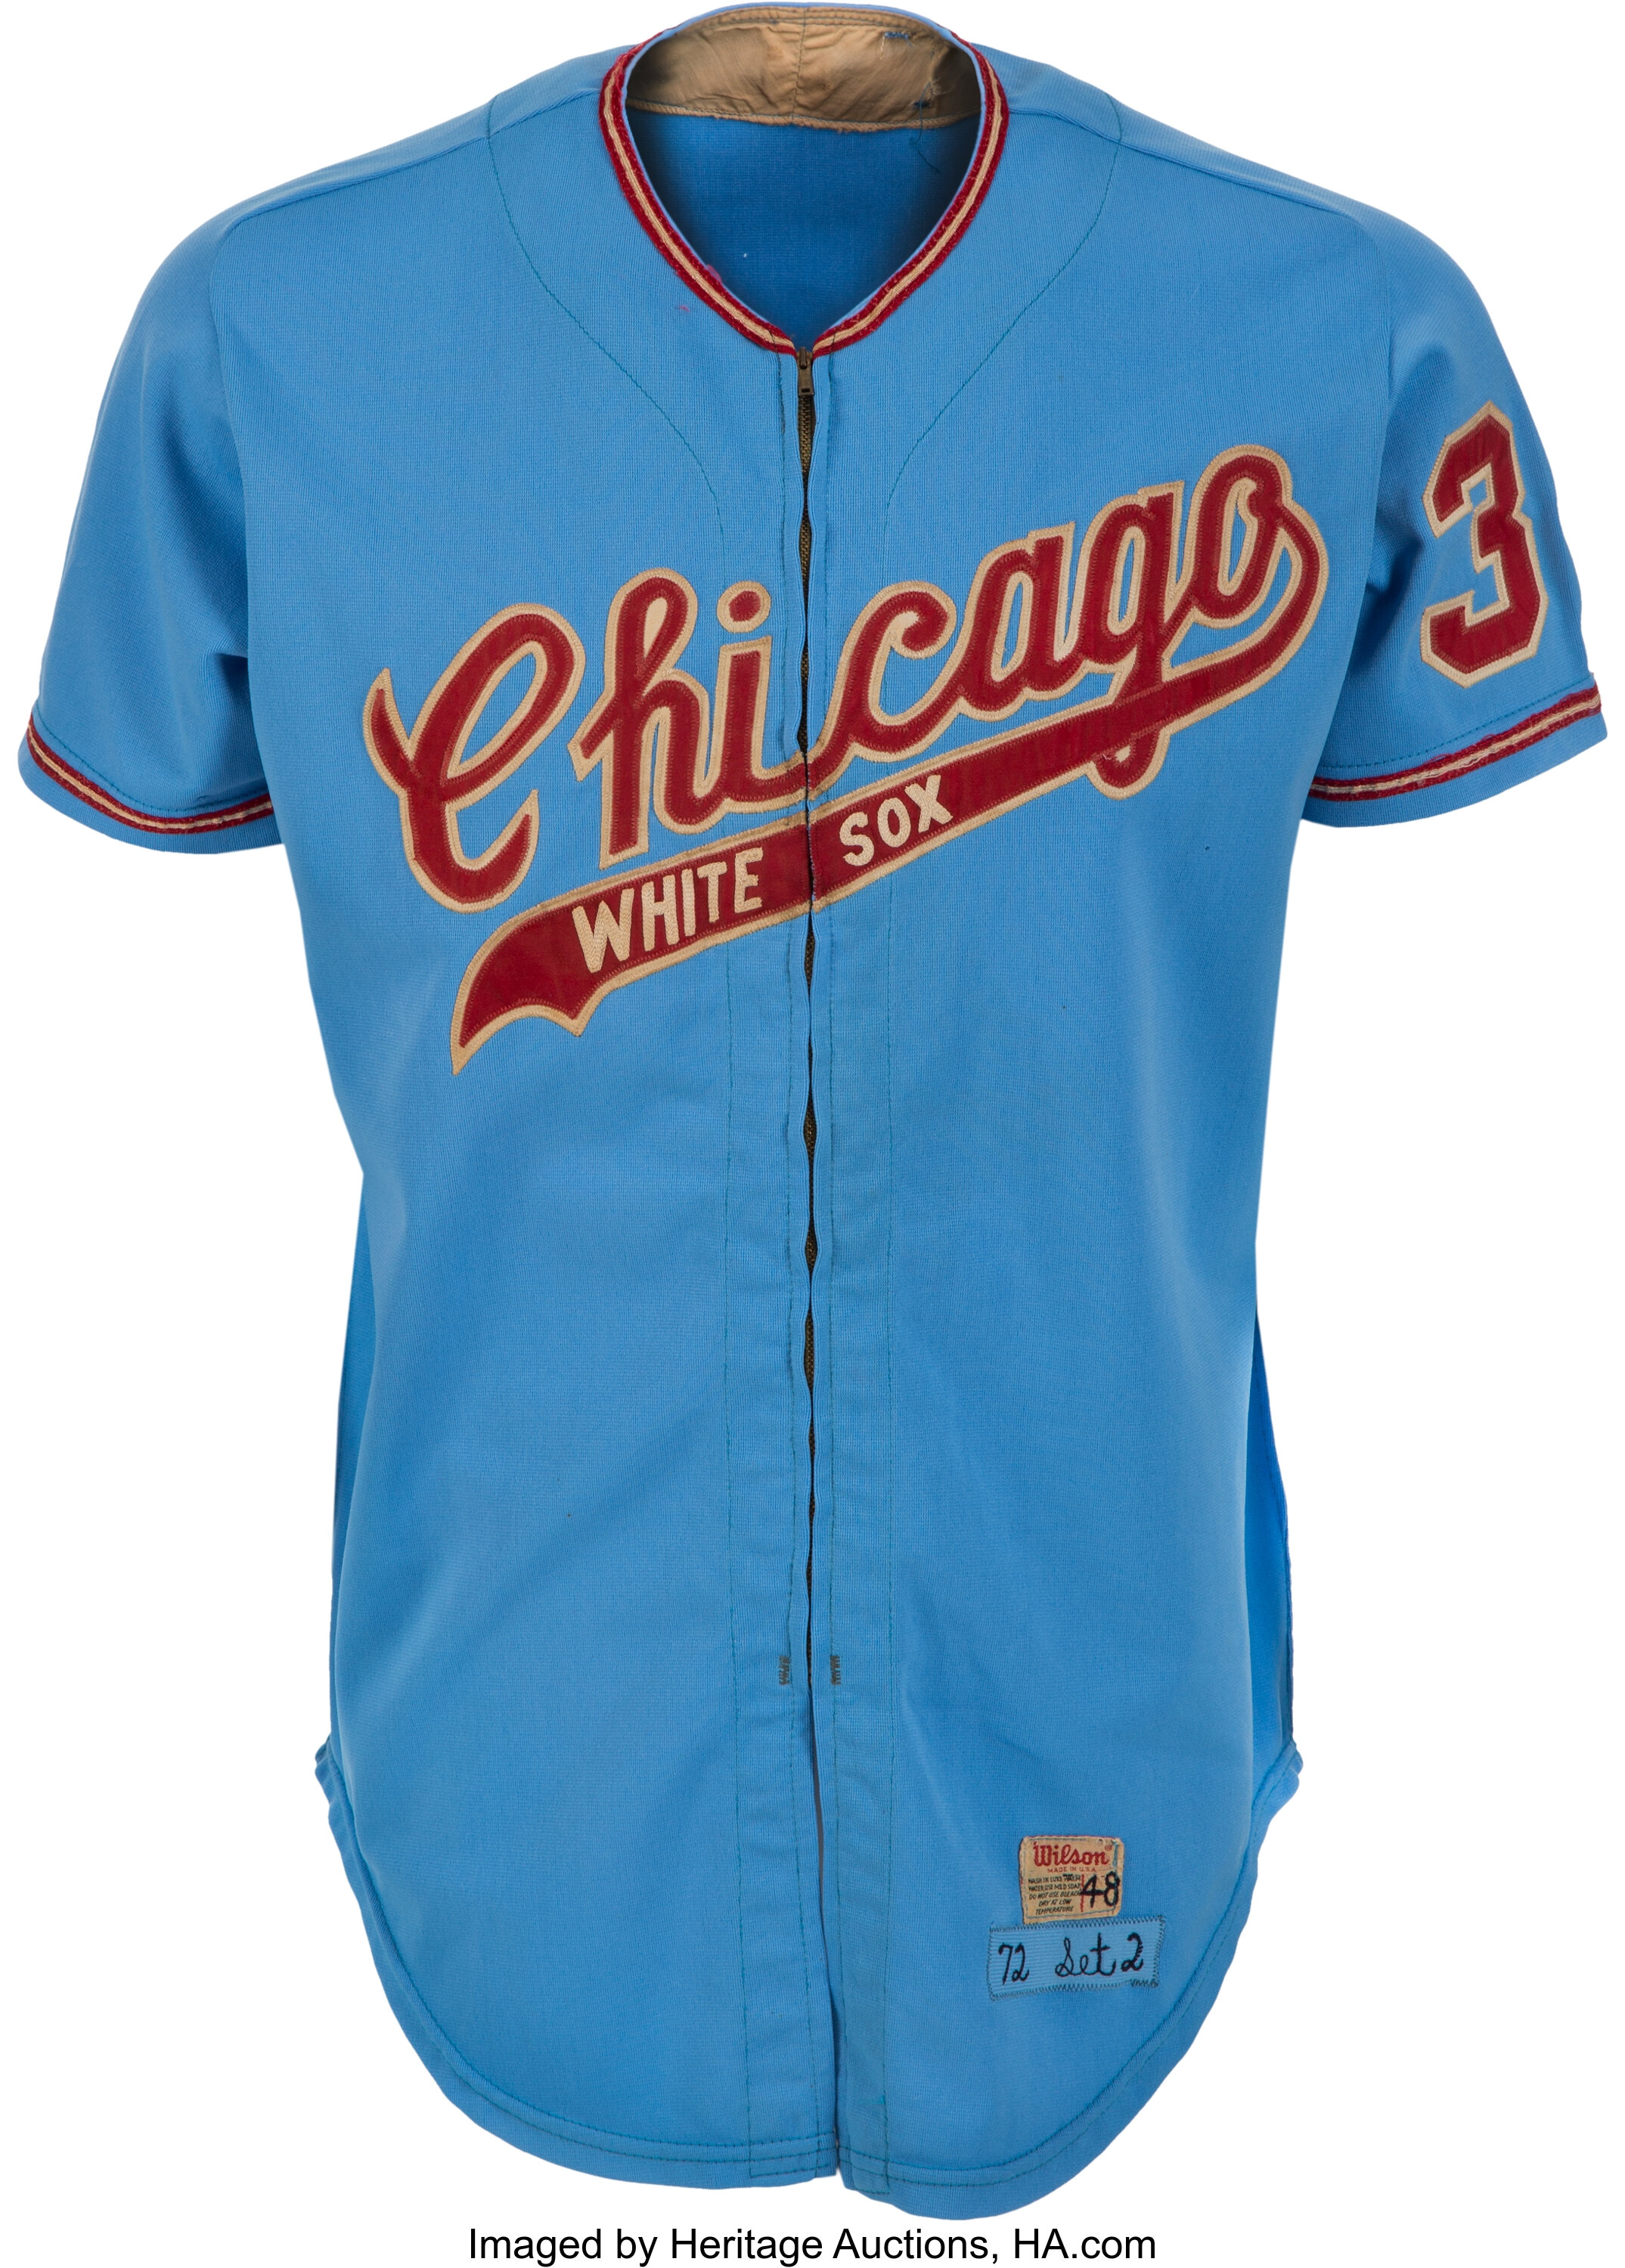 Chicago White Sox Jerseys, White Sox Baseball Jerseys, Uniforms